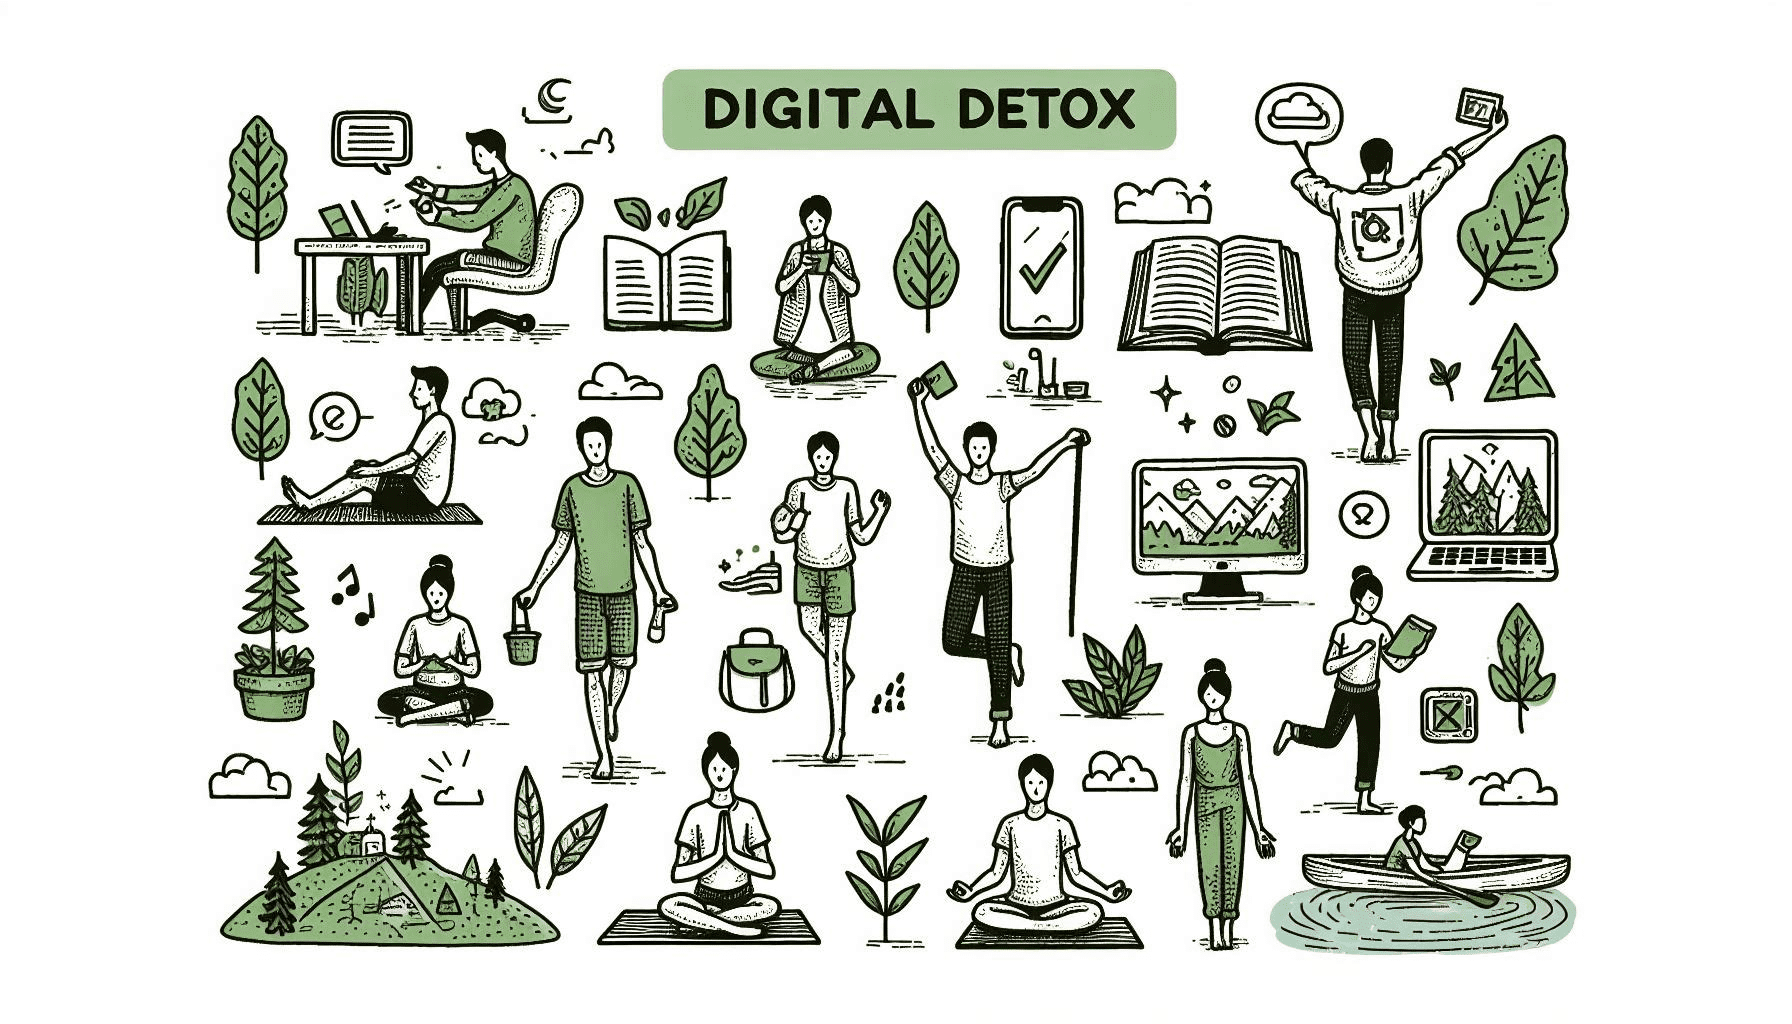 Digital Detox ways